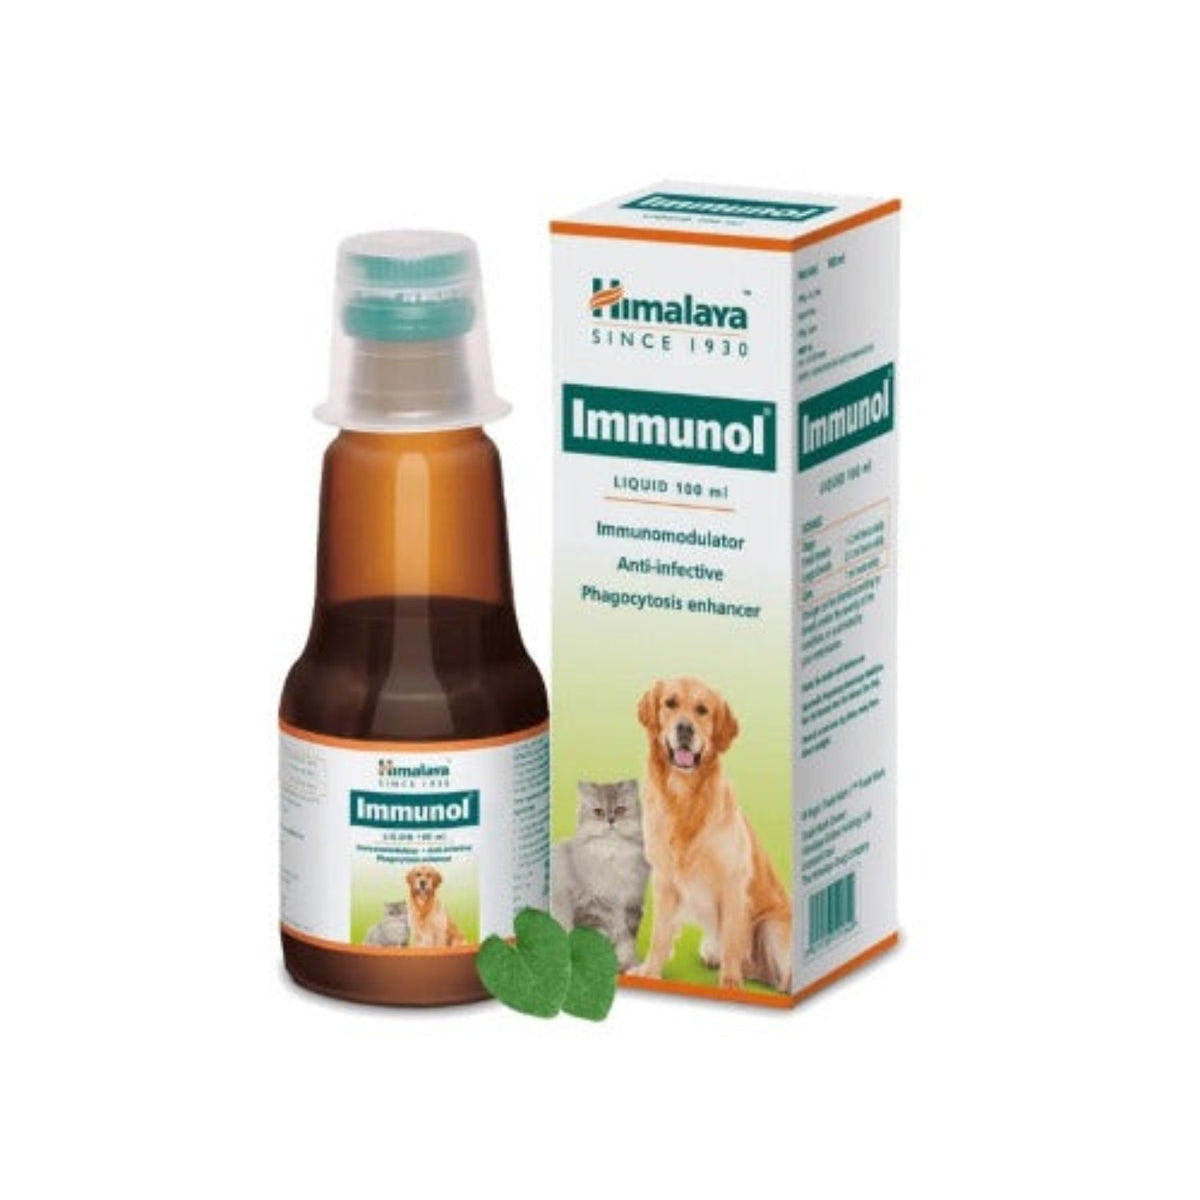 Himalaya Immunol Pet Liquid 100 ml